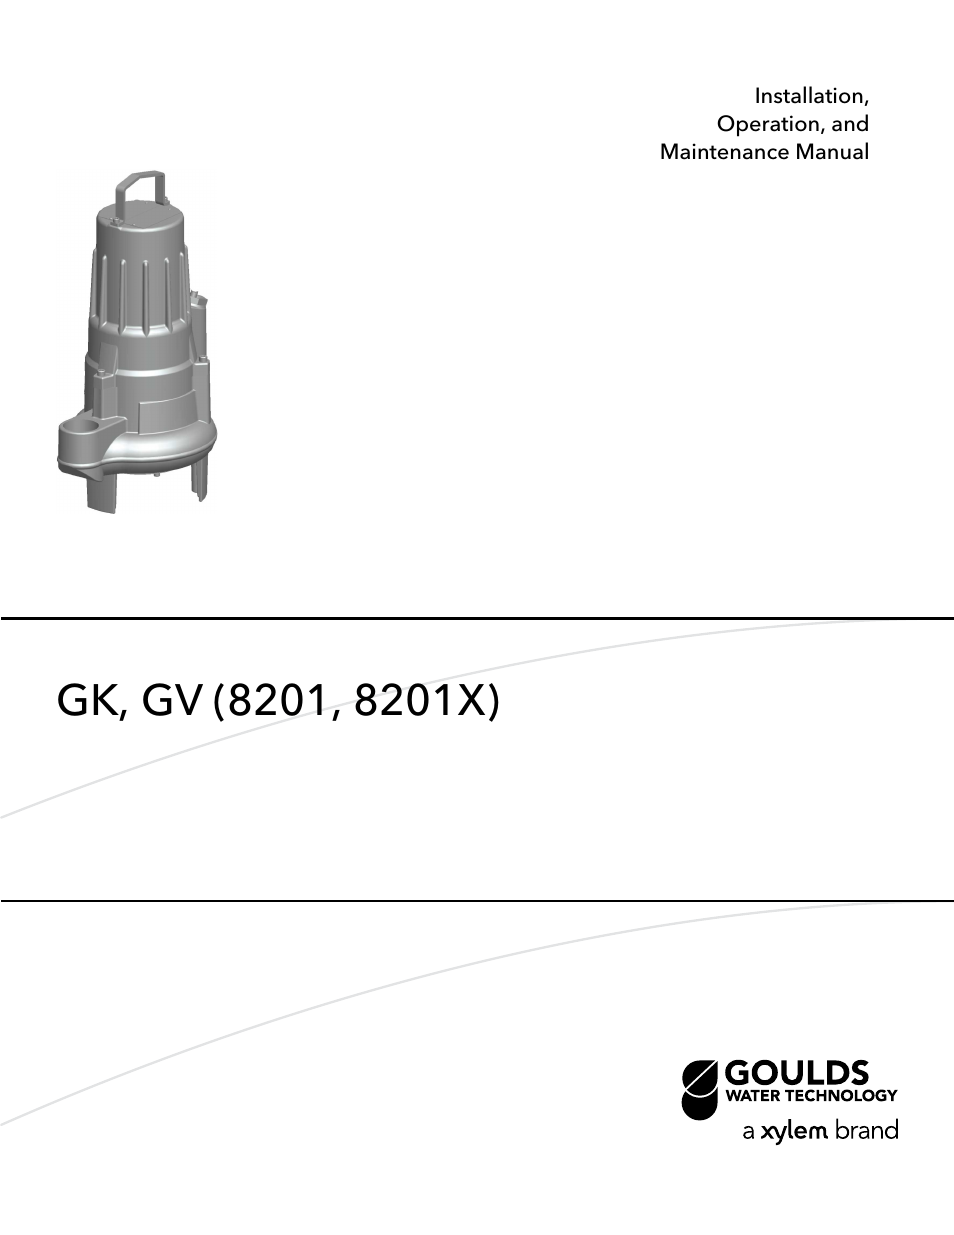 GK GV (8201, 8201X)